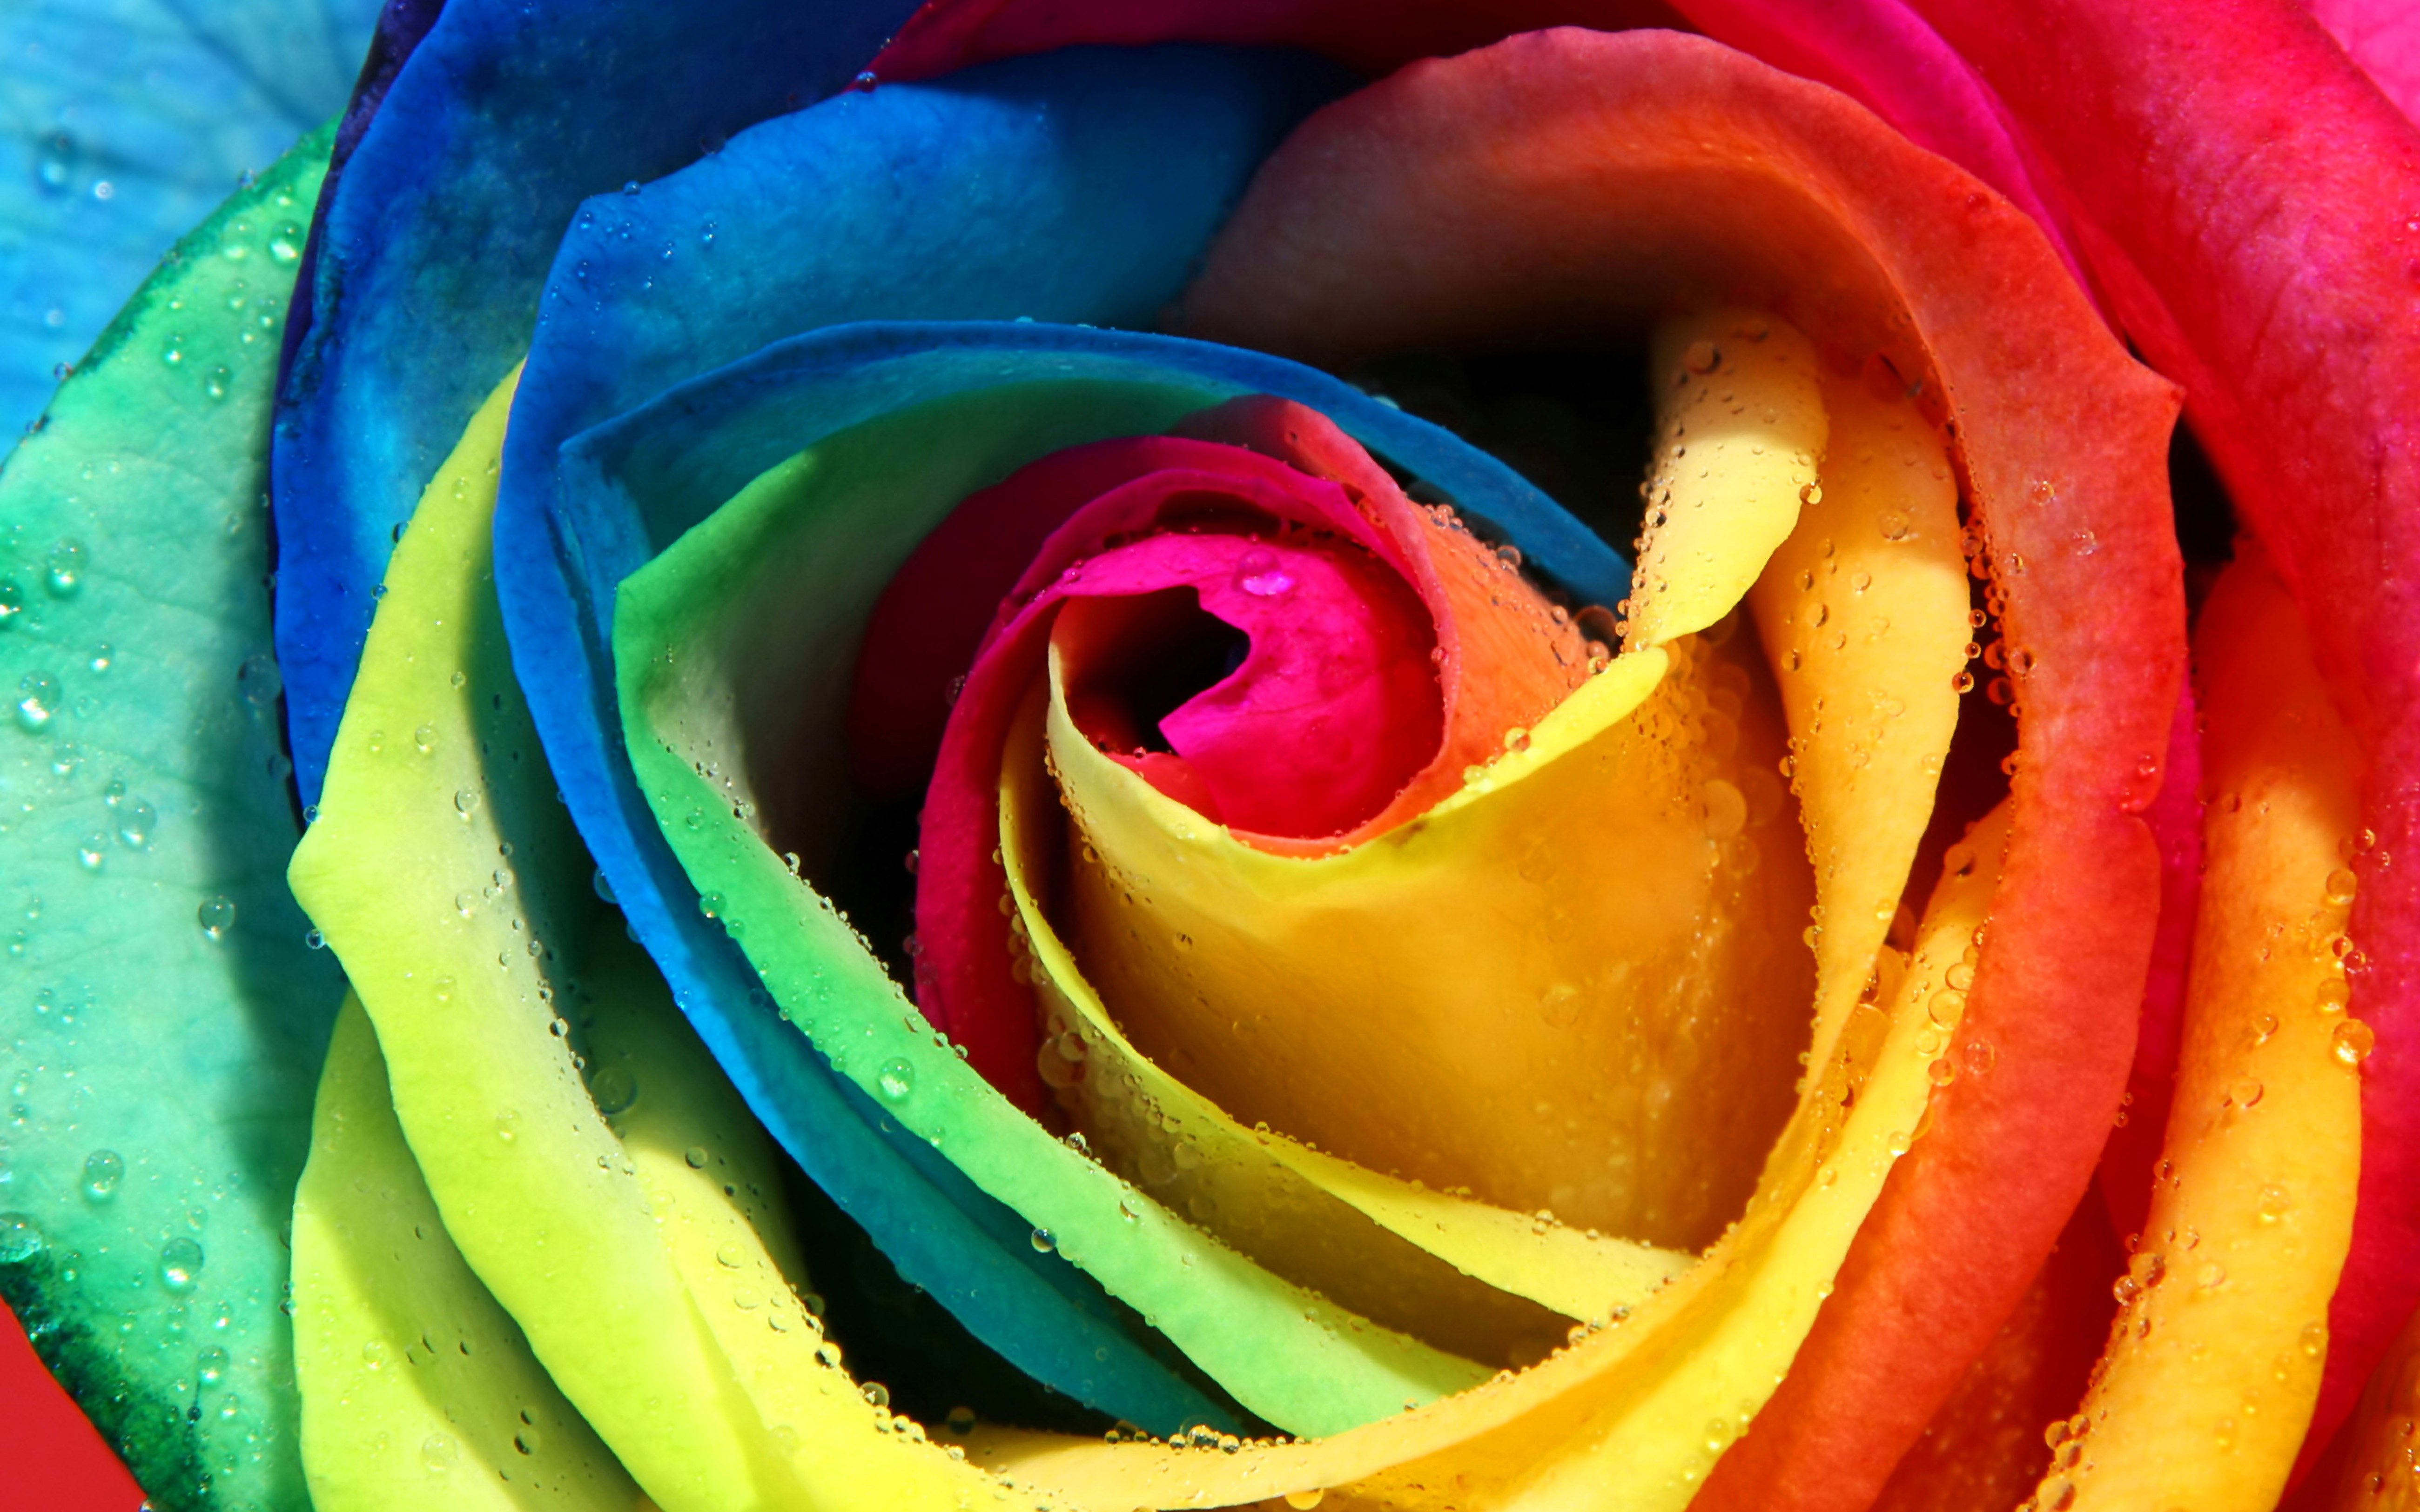 Rose colorful rainbow petals bud dew wallpaper